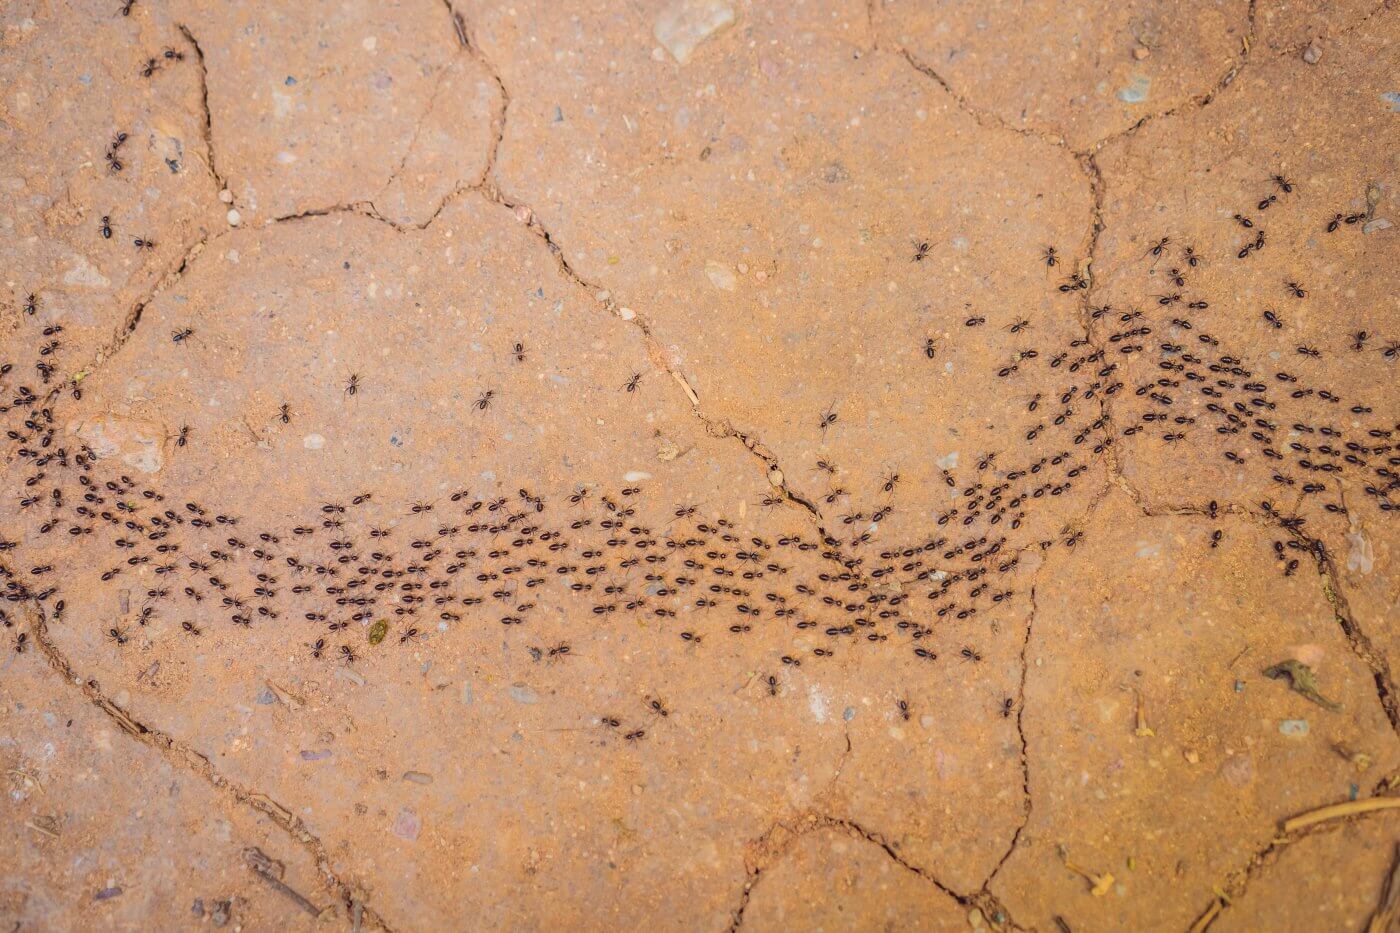 How do Ants Communicate?